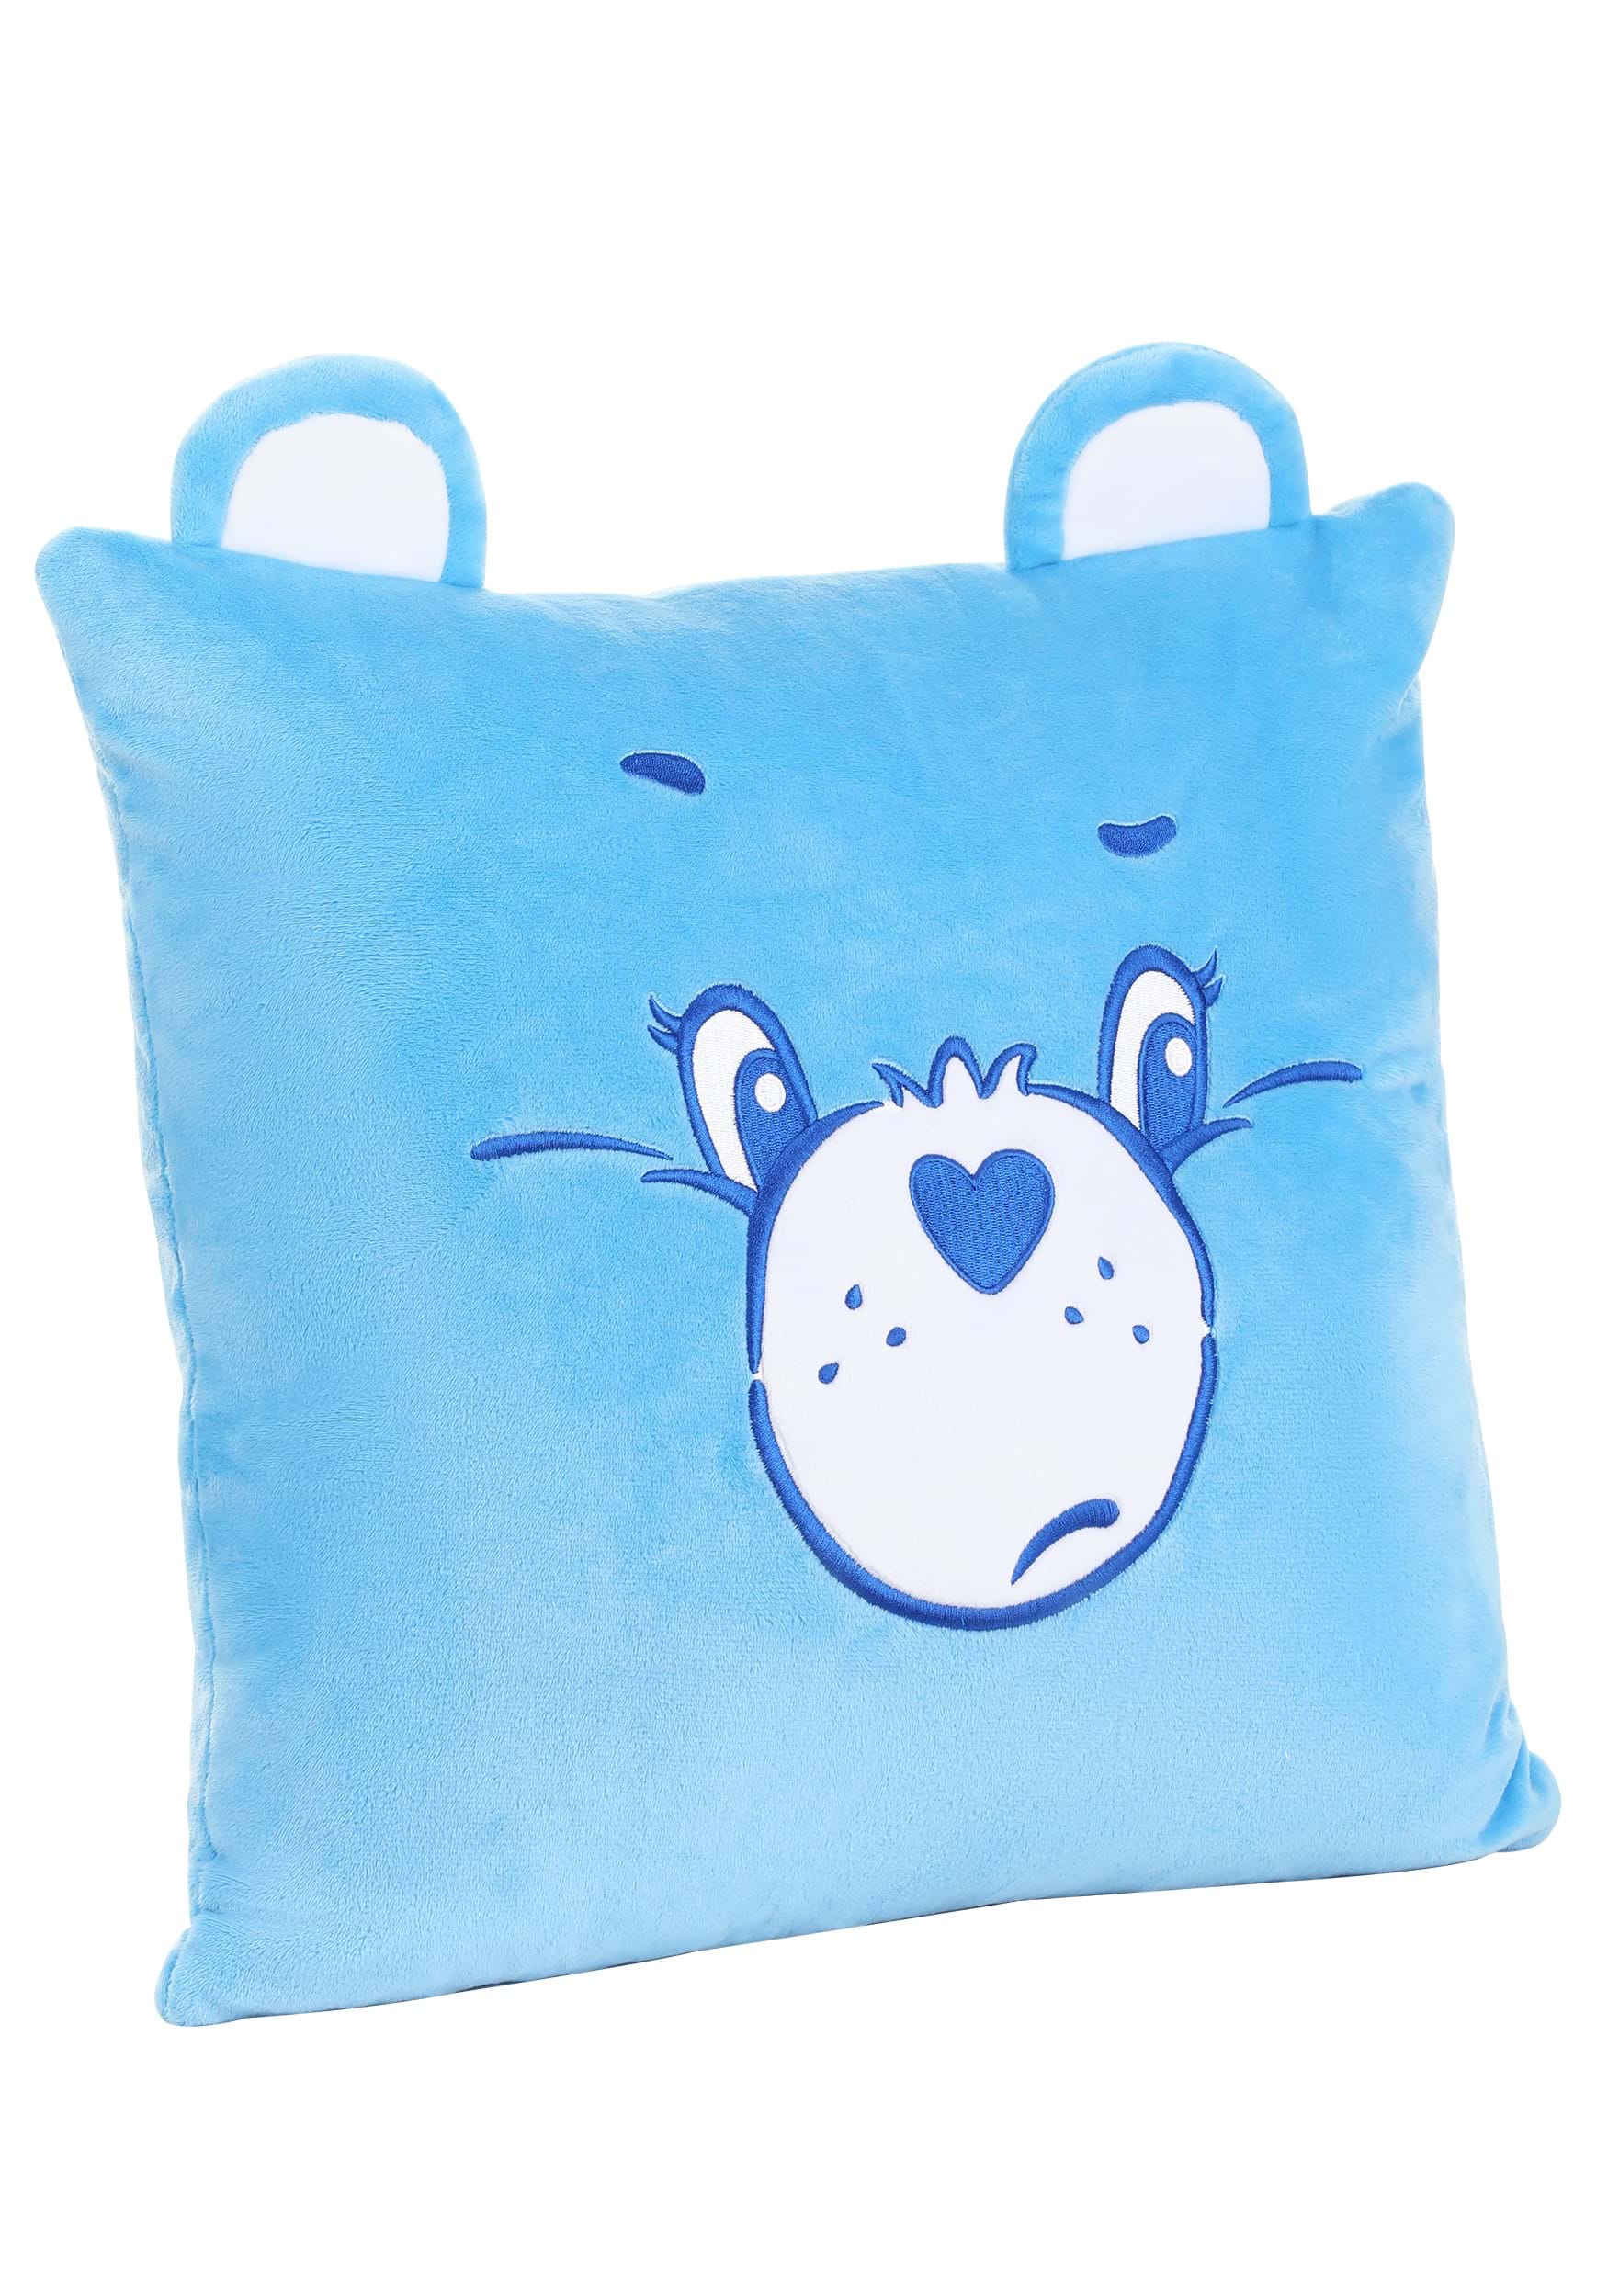 Grumpy Bears Care Bears Plush Pillow , Care Bears Home & Office